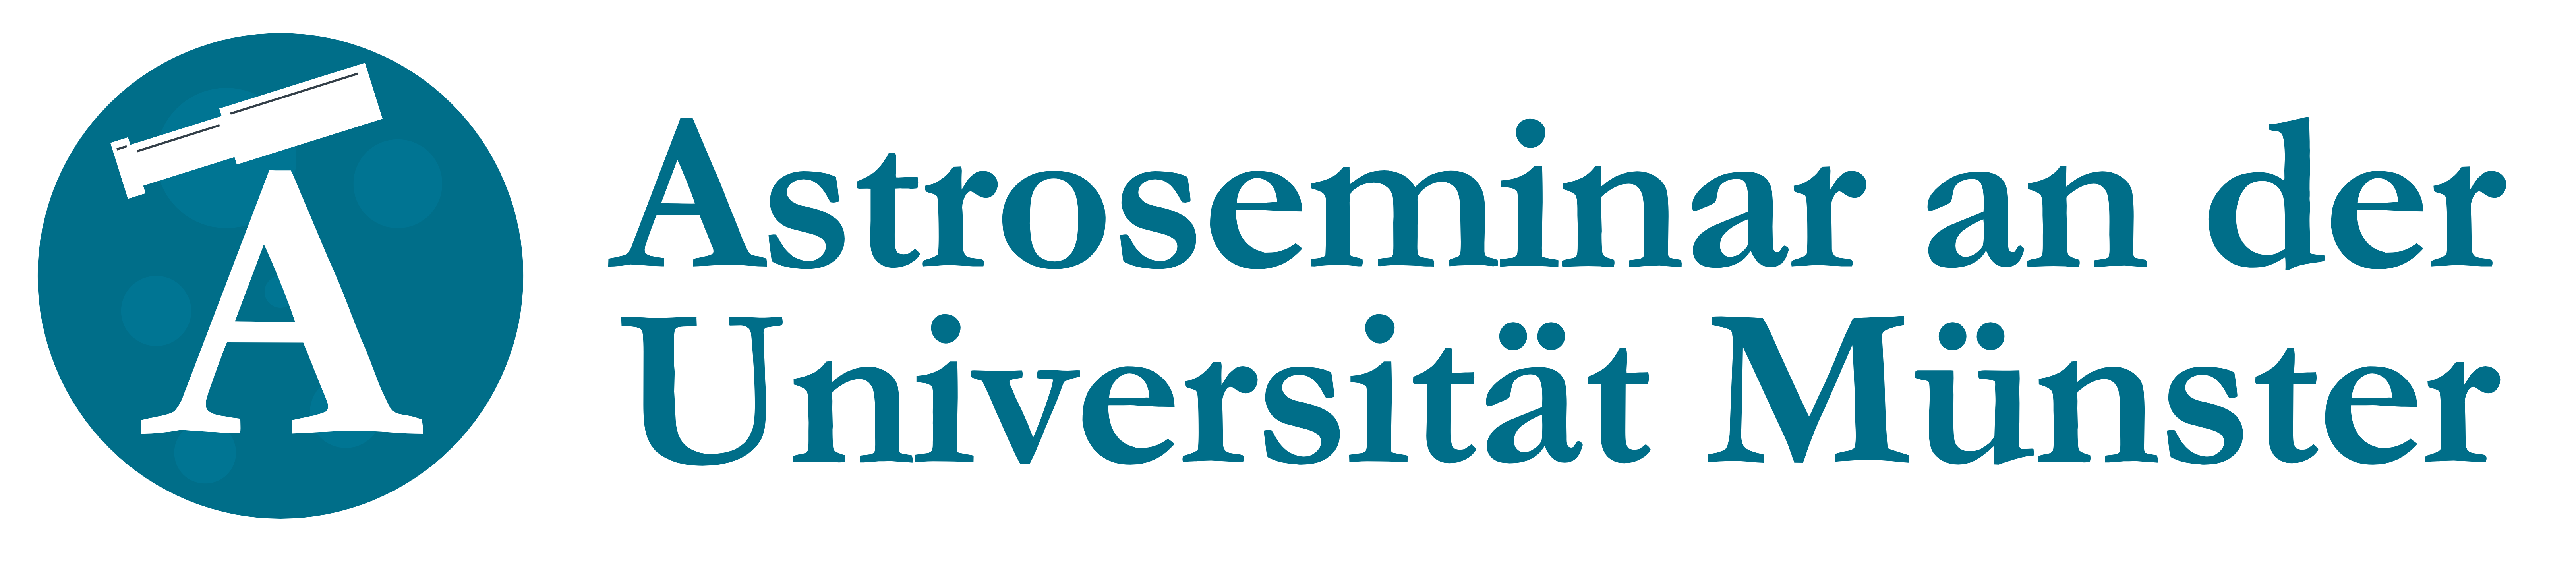 Astroseminar an der <br /> Universität Münster